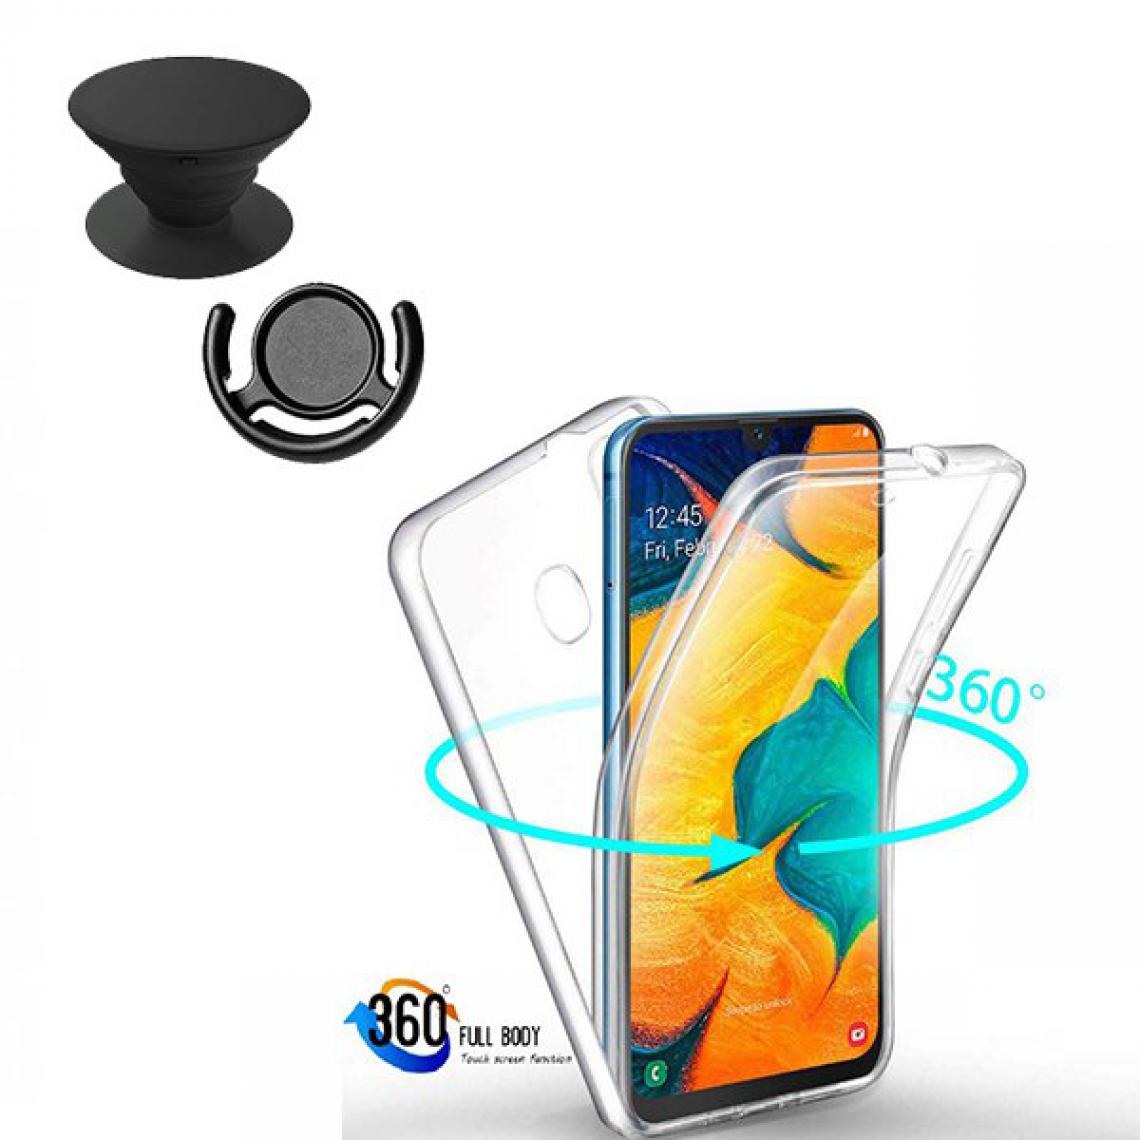 Phonecare - Kit Coque 3x1 360° Impact Protection + 1 PopSocket + 1 Support PopSocket Noir - Impact Protection - Samsung A40s - Coque, étui smartphone